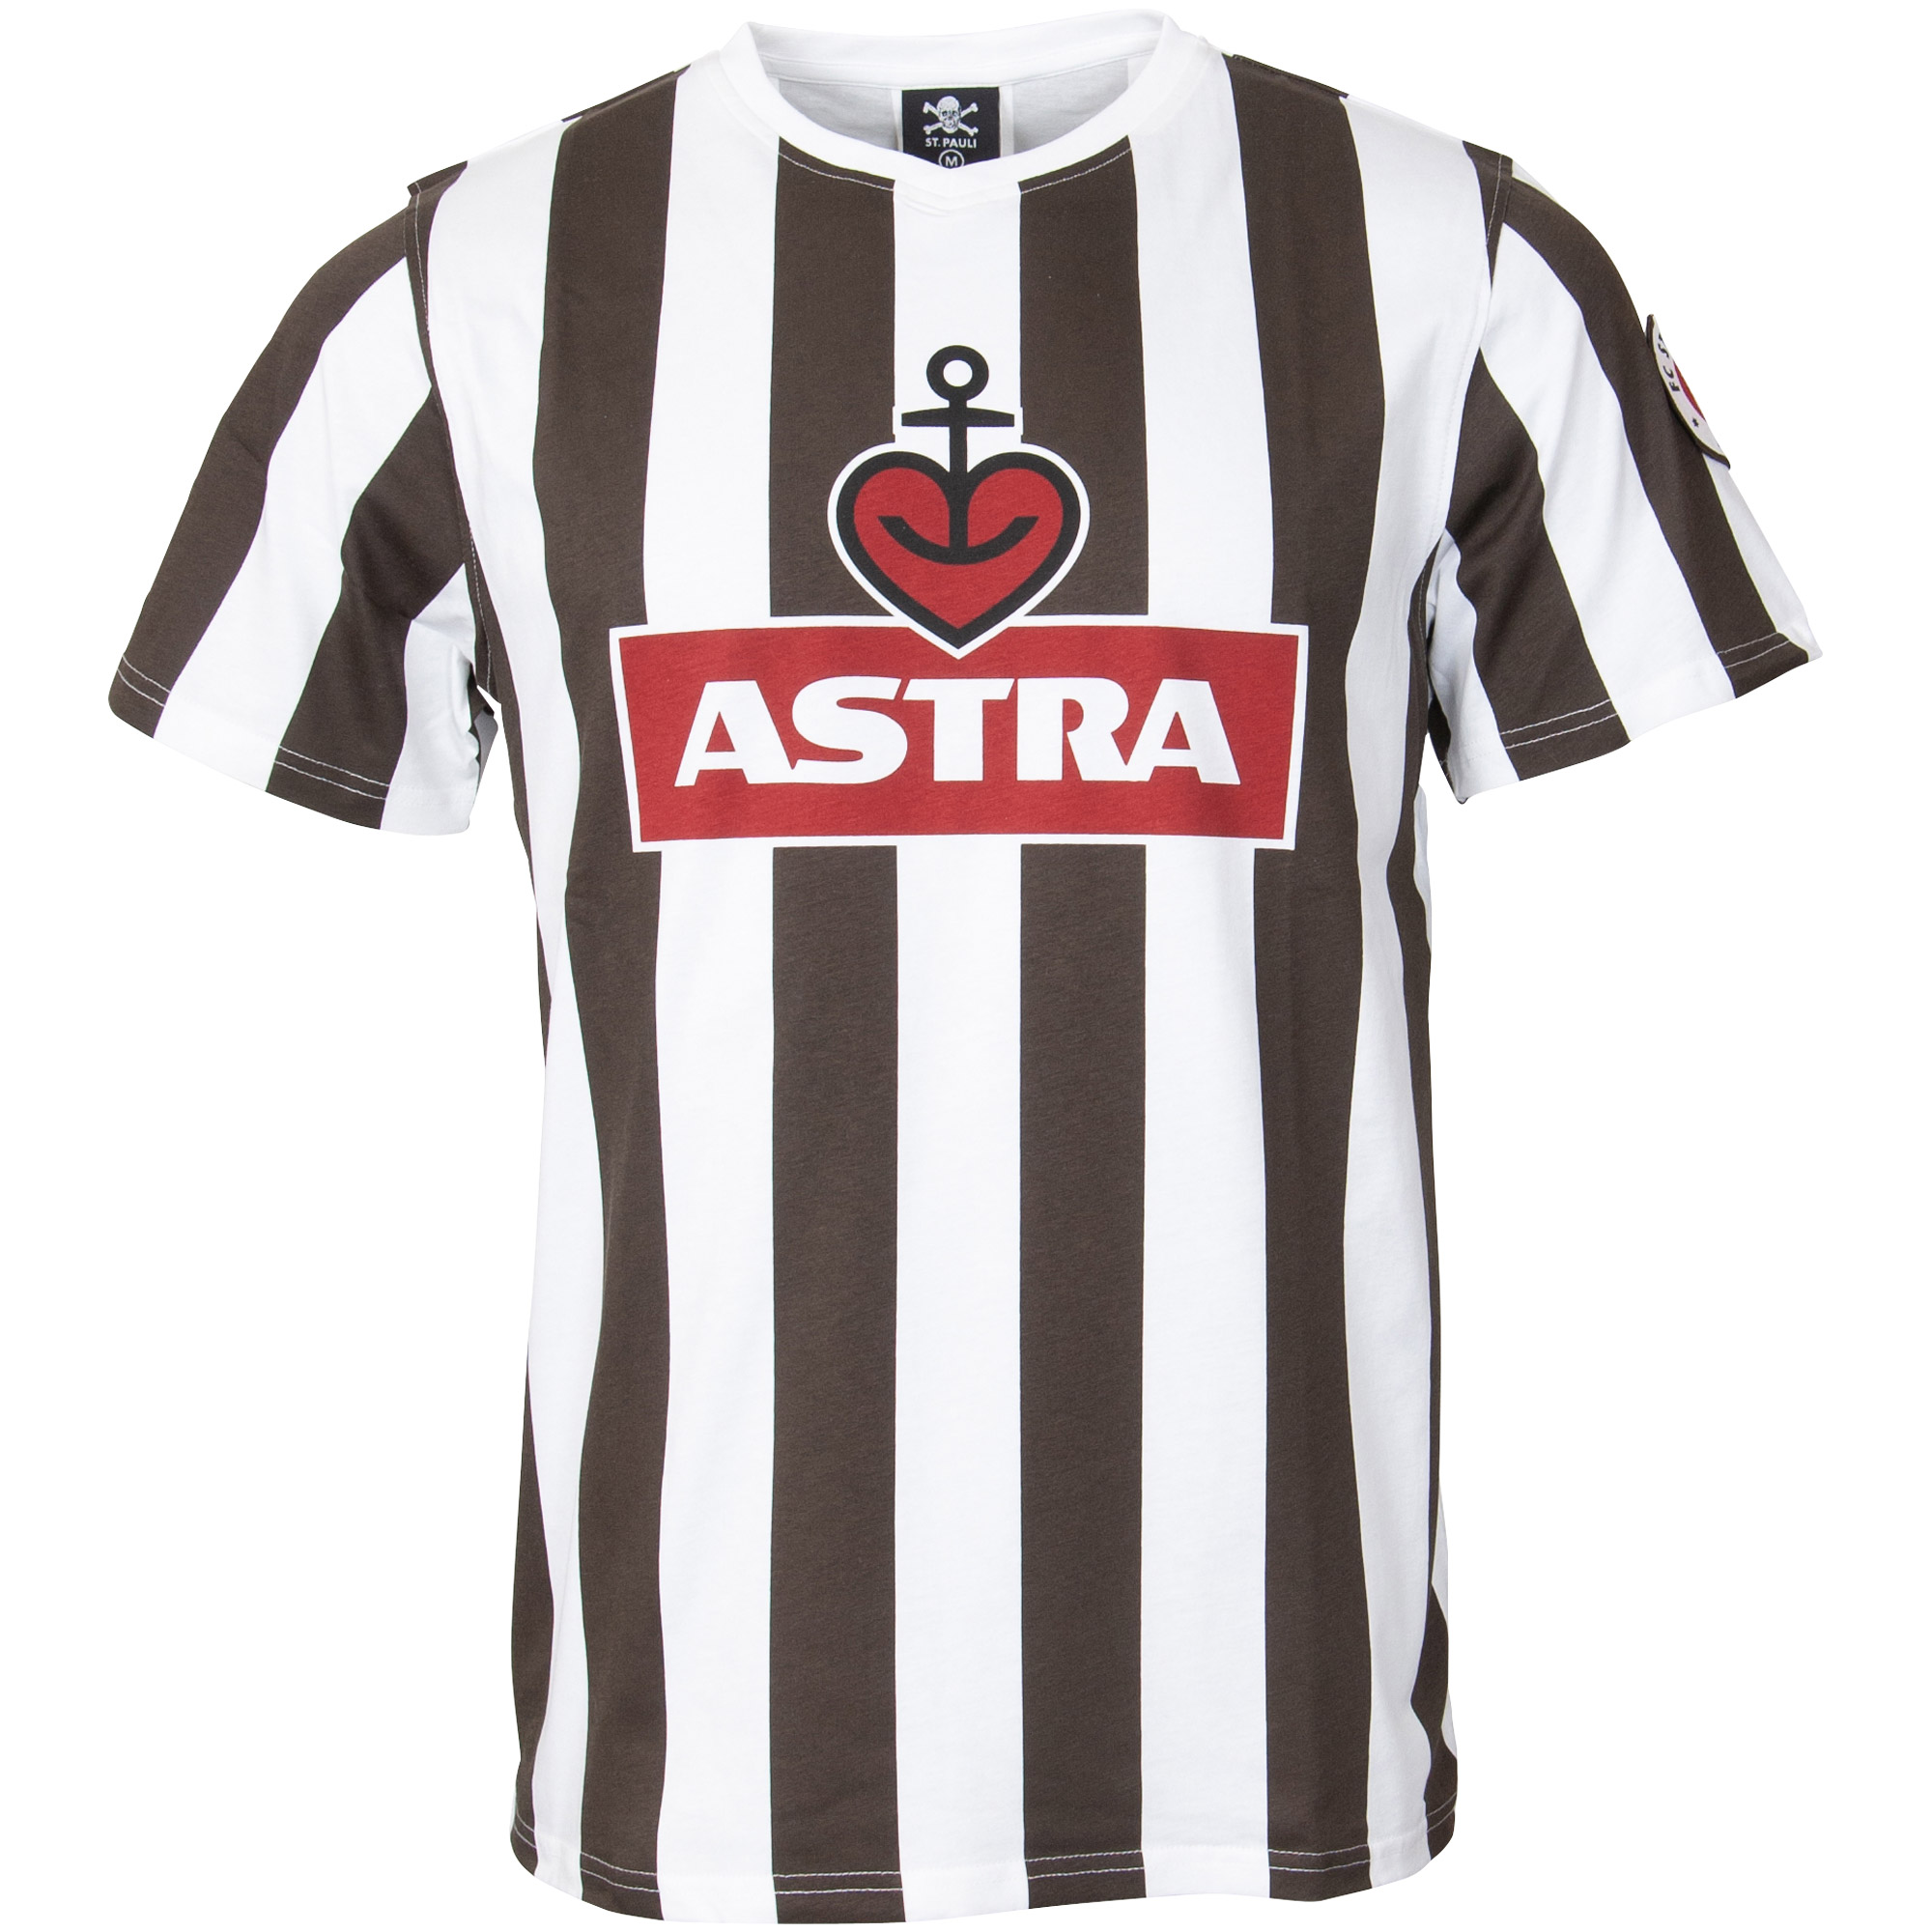 FC St. Pauli - T-Shirt Traditions-Shirt Astra - braun/weiß